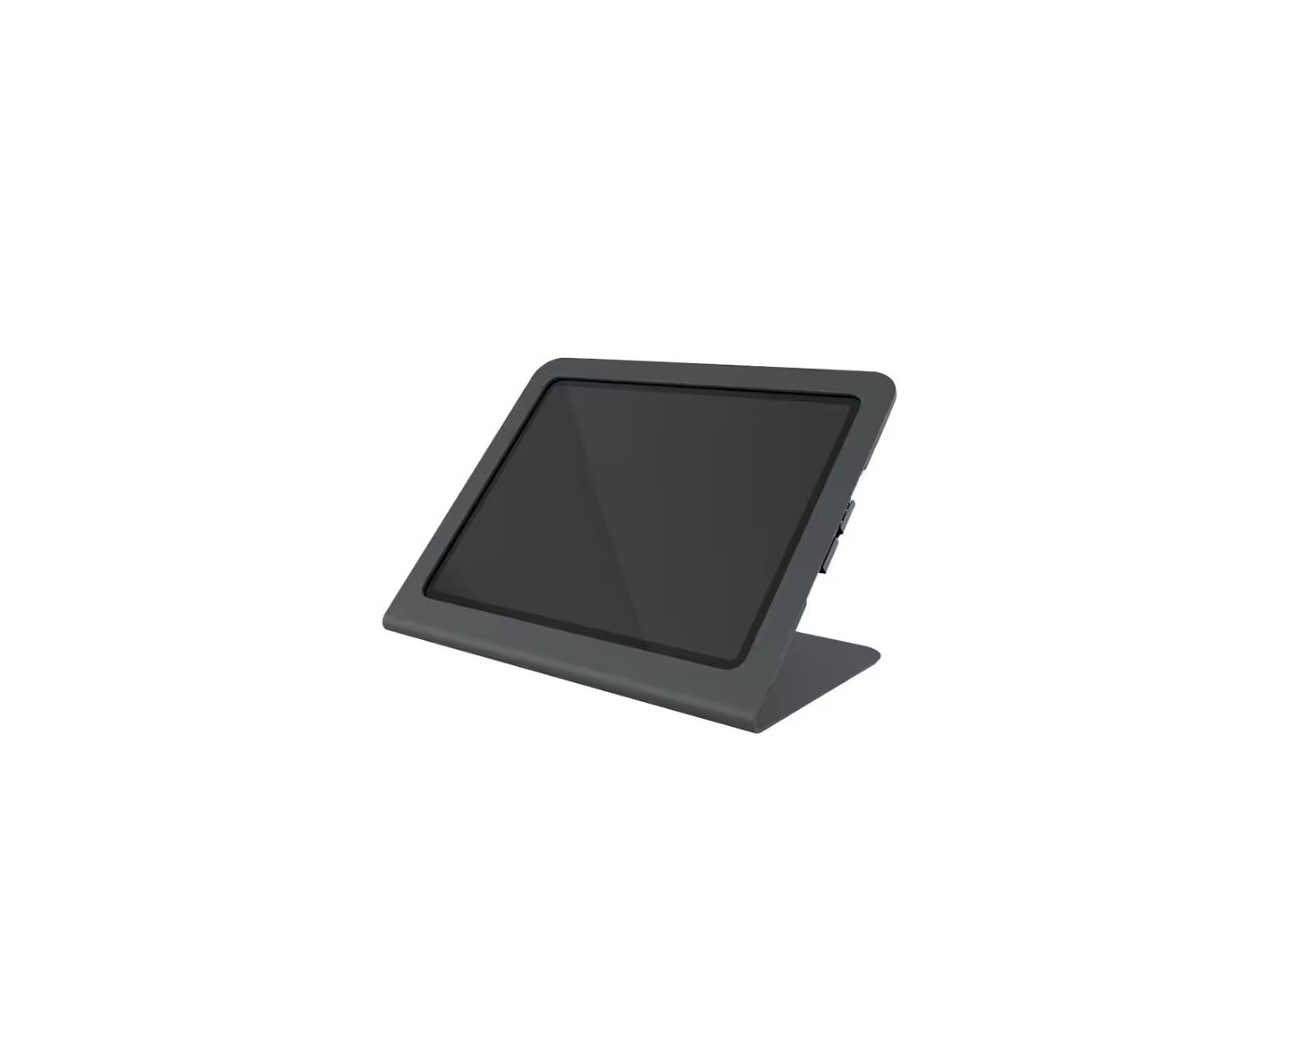 Heckler Windfall Stand For Tablet Black Gray H549-BG